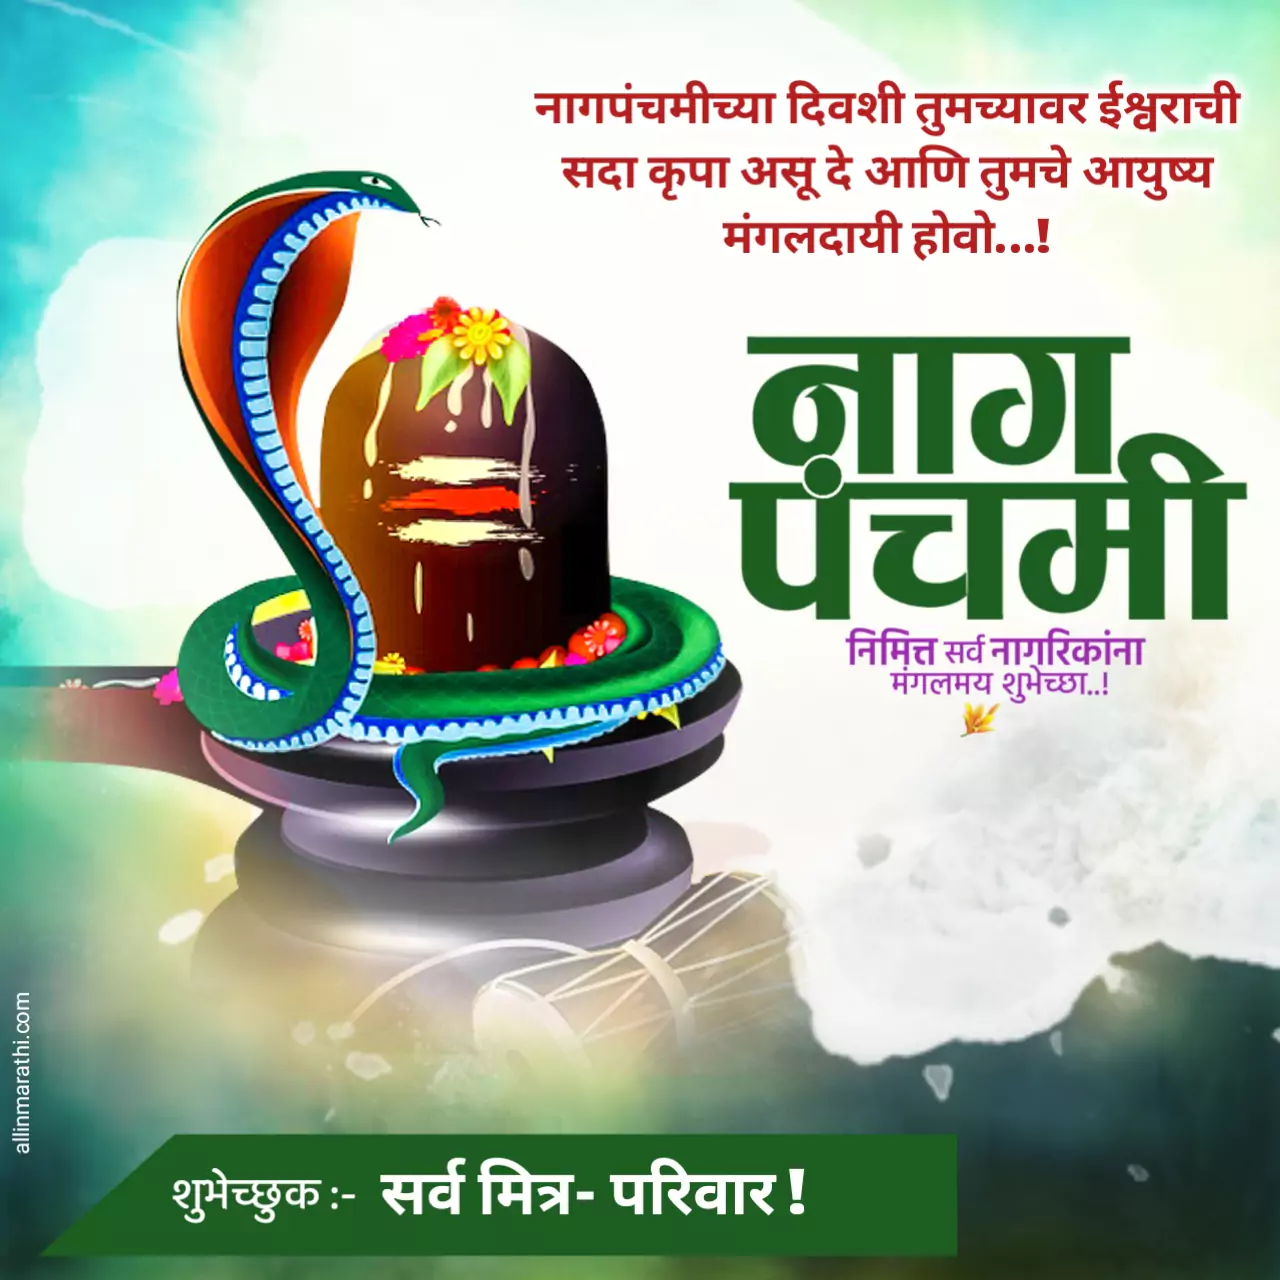 Nag Panchami Wishes In Marathi , नागपंचमी शुभेच्छा मराठी